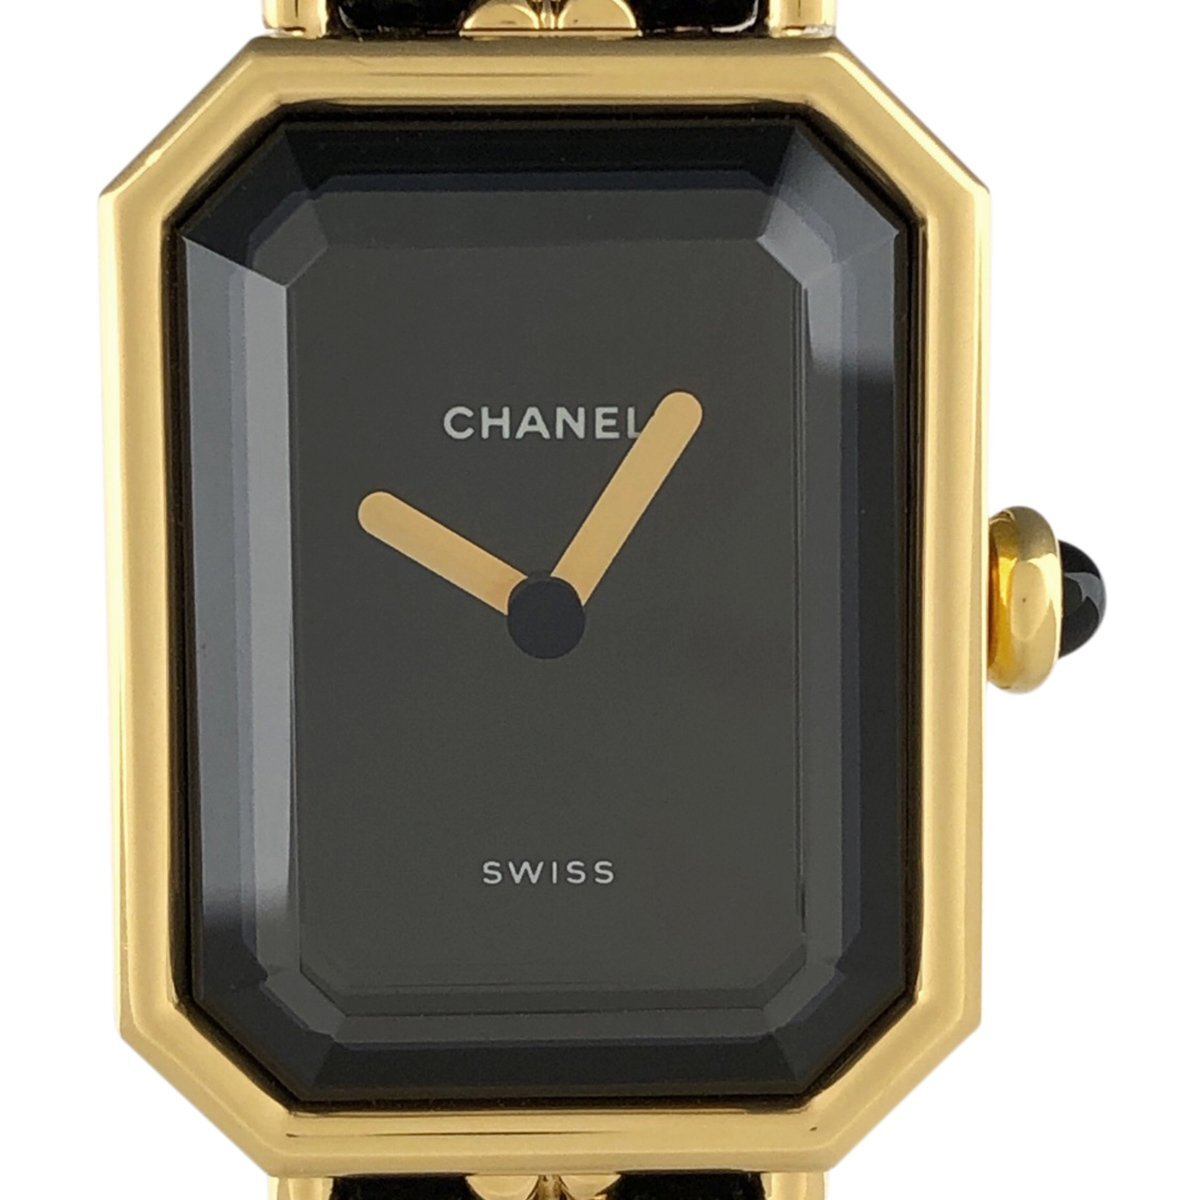  Chanel CHANEL Premiere M size H0001 wristwatch SS leather quartz black lady's [ used ]